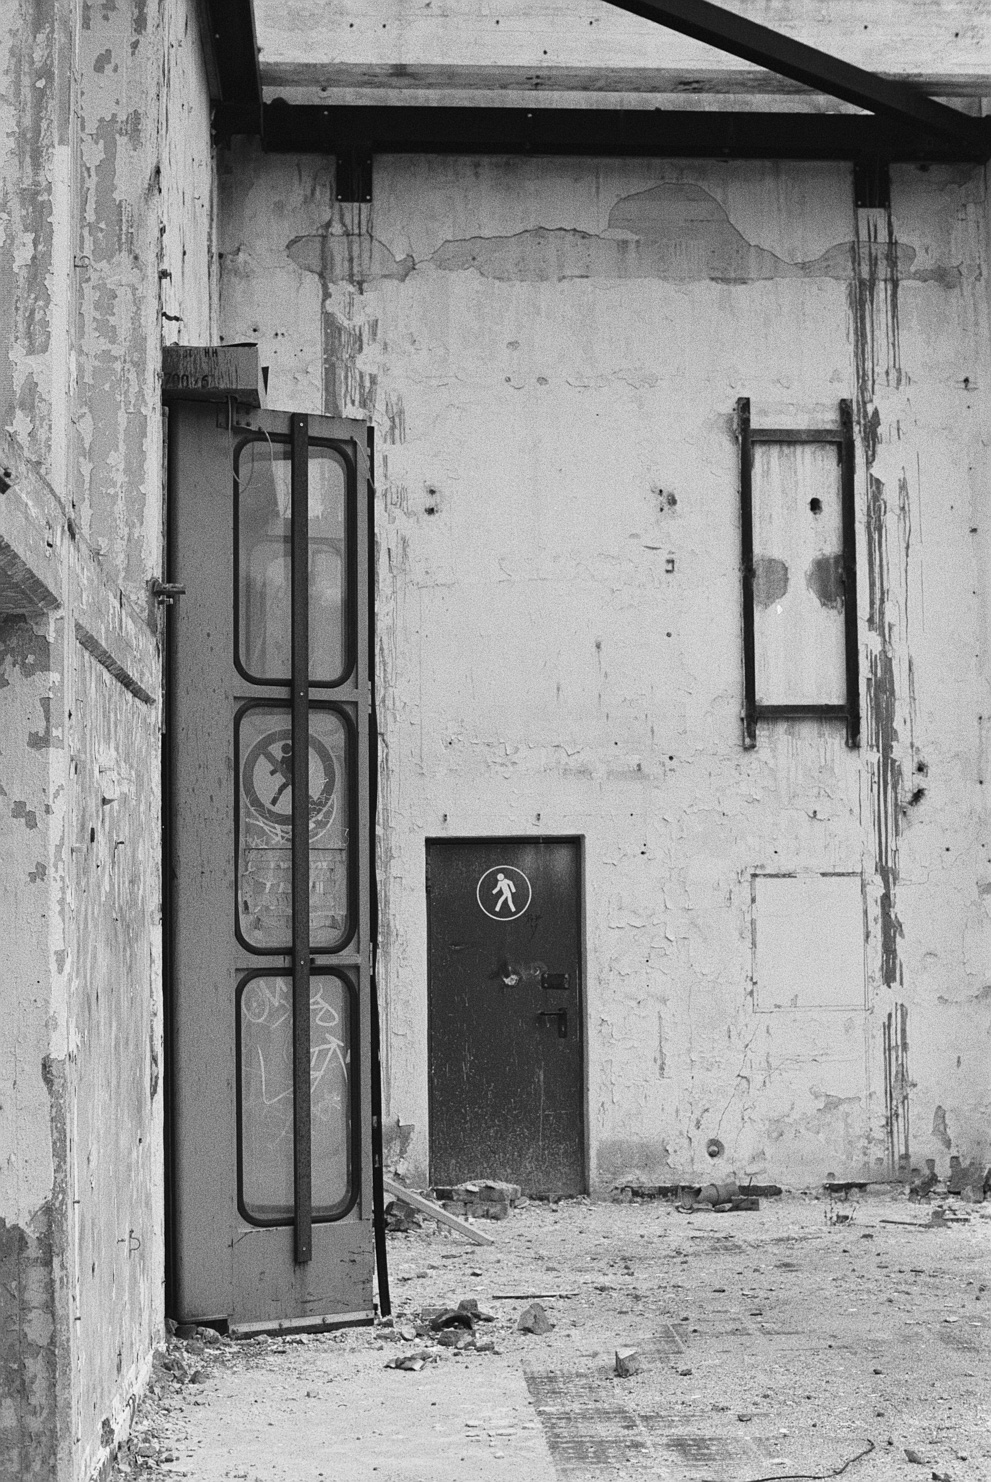 Abandoned factory. Shot on Kodak Tri-X 400.